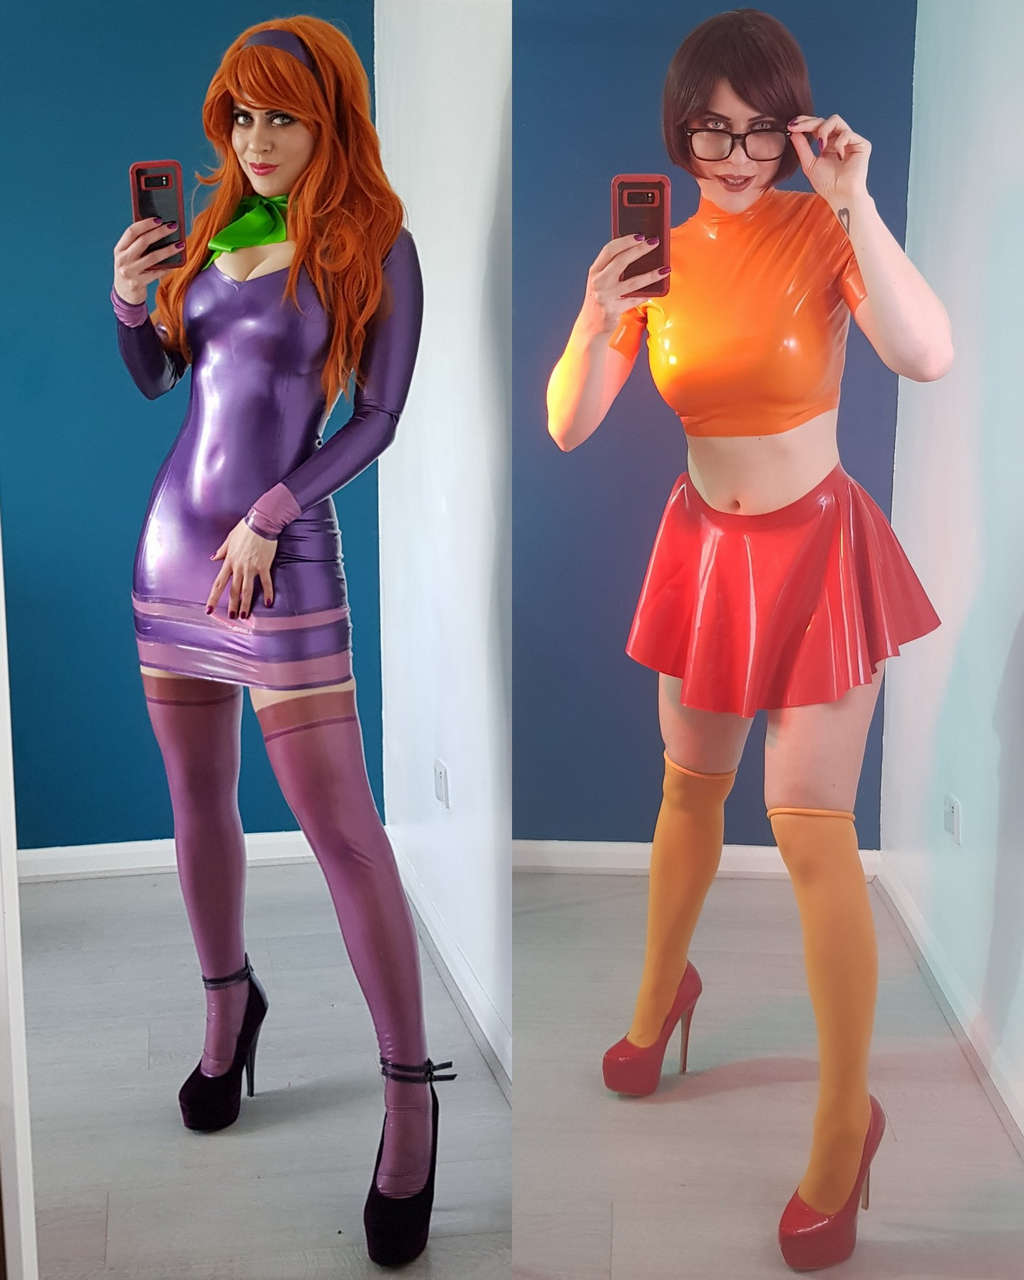 Purplemuffinz As Daphne And Velma Scooby Doo NSF